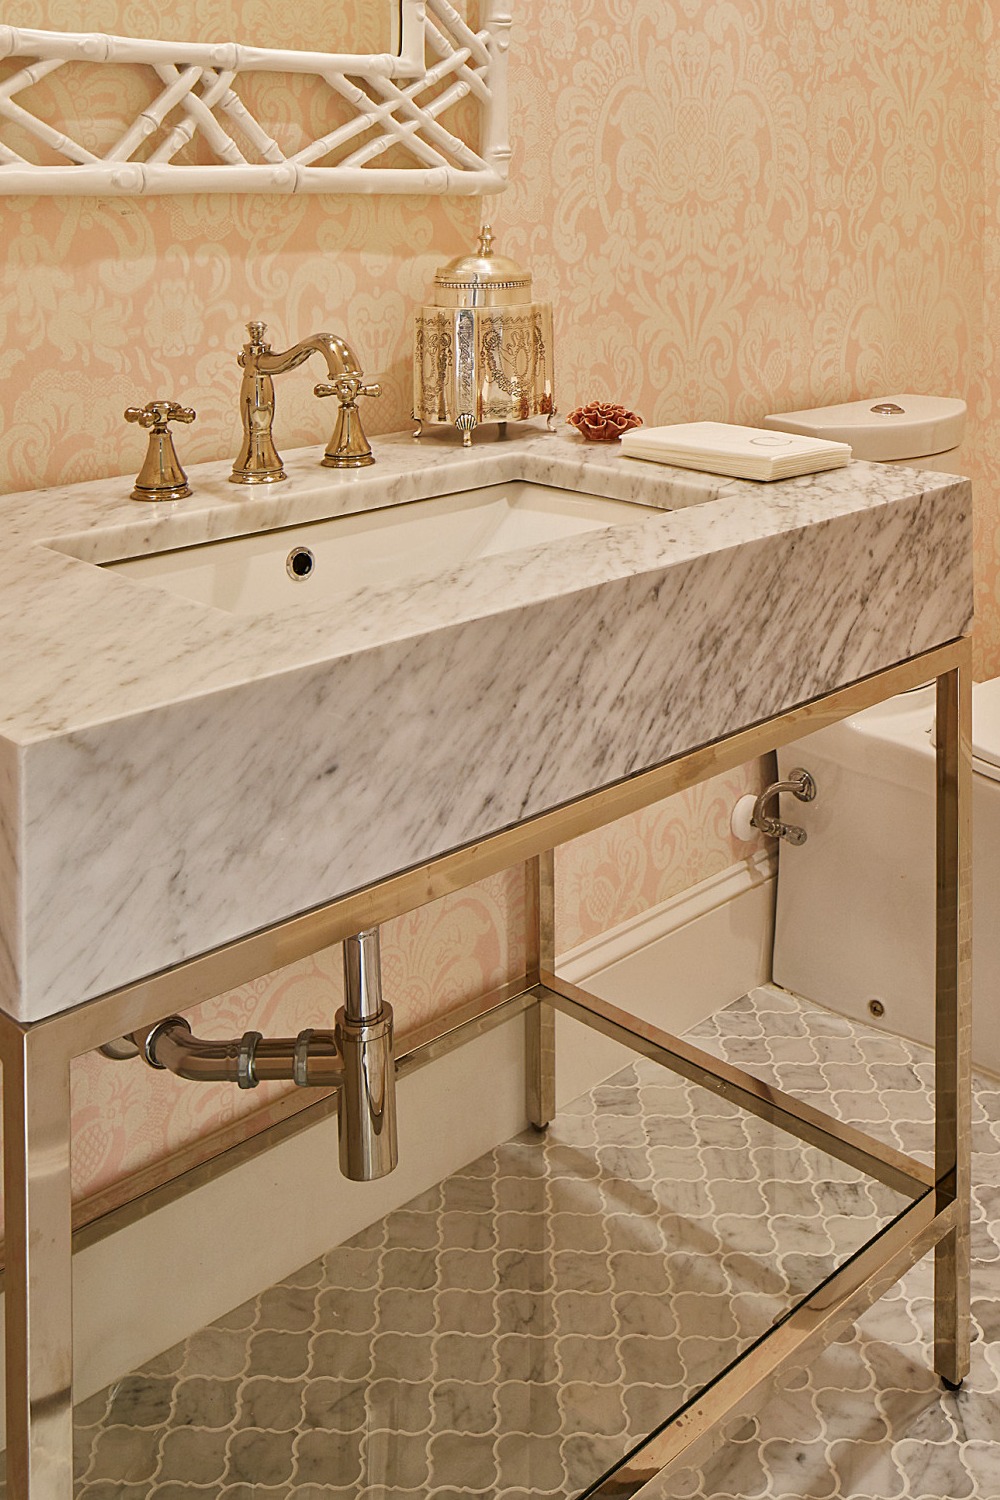 Bathroom Vanities Base Material Miter Edge Carrara Marble Countertop Powder Room Style Console